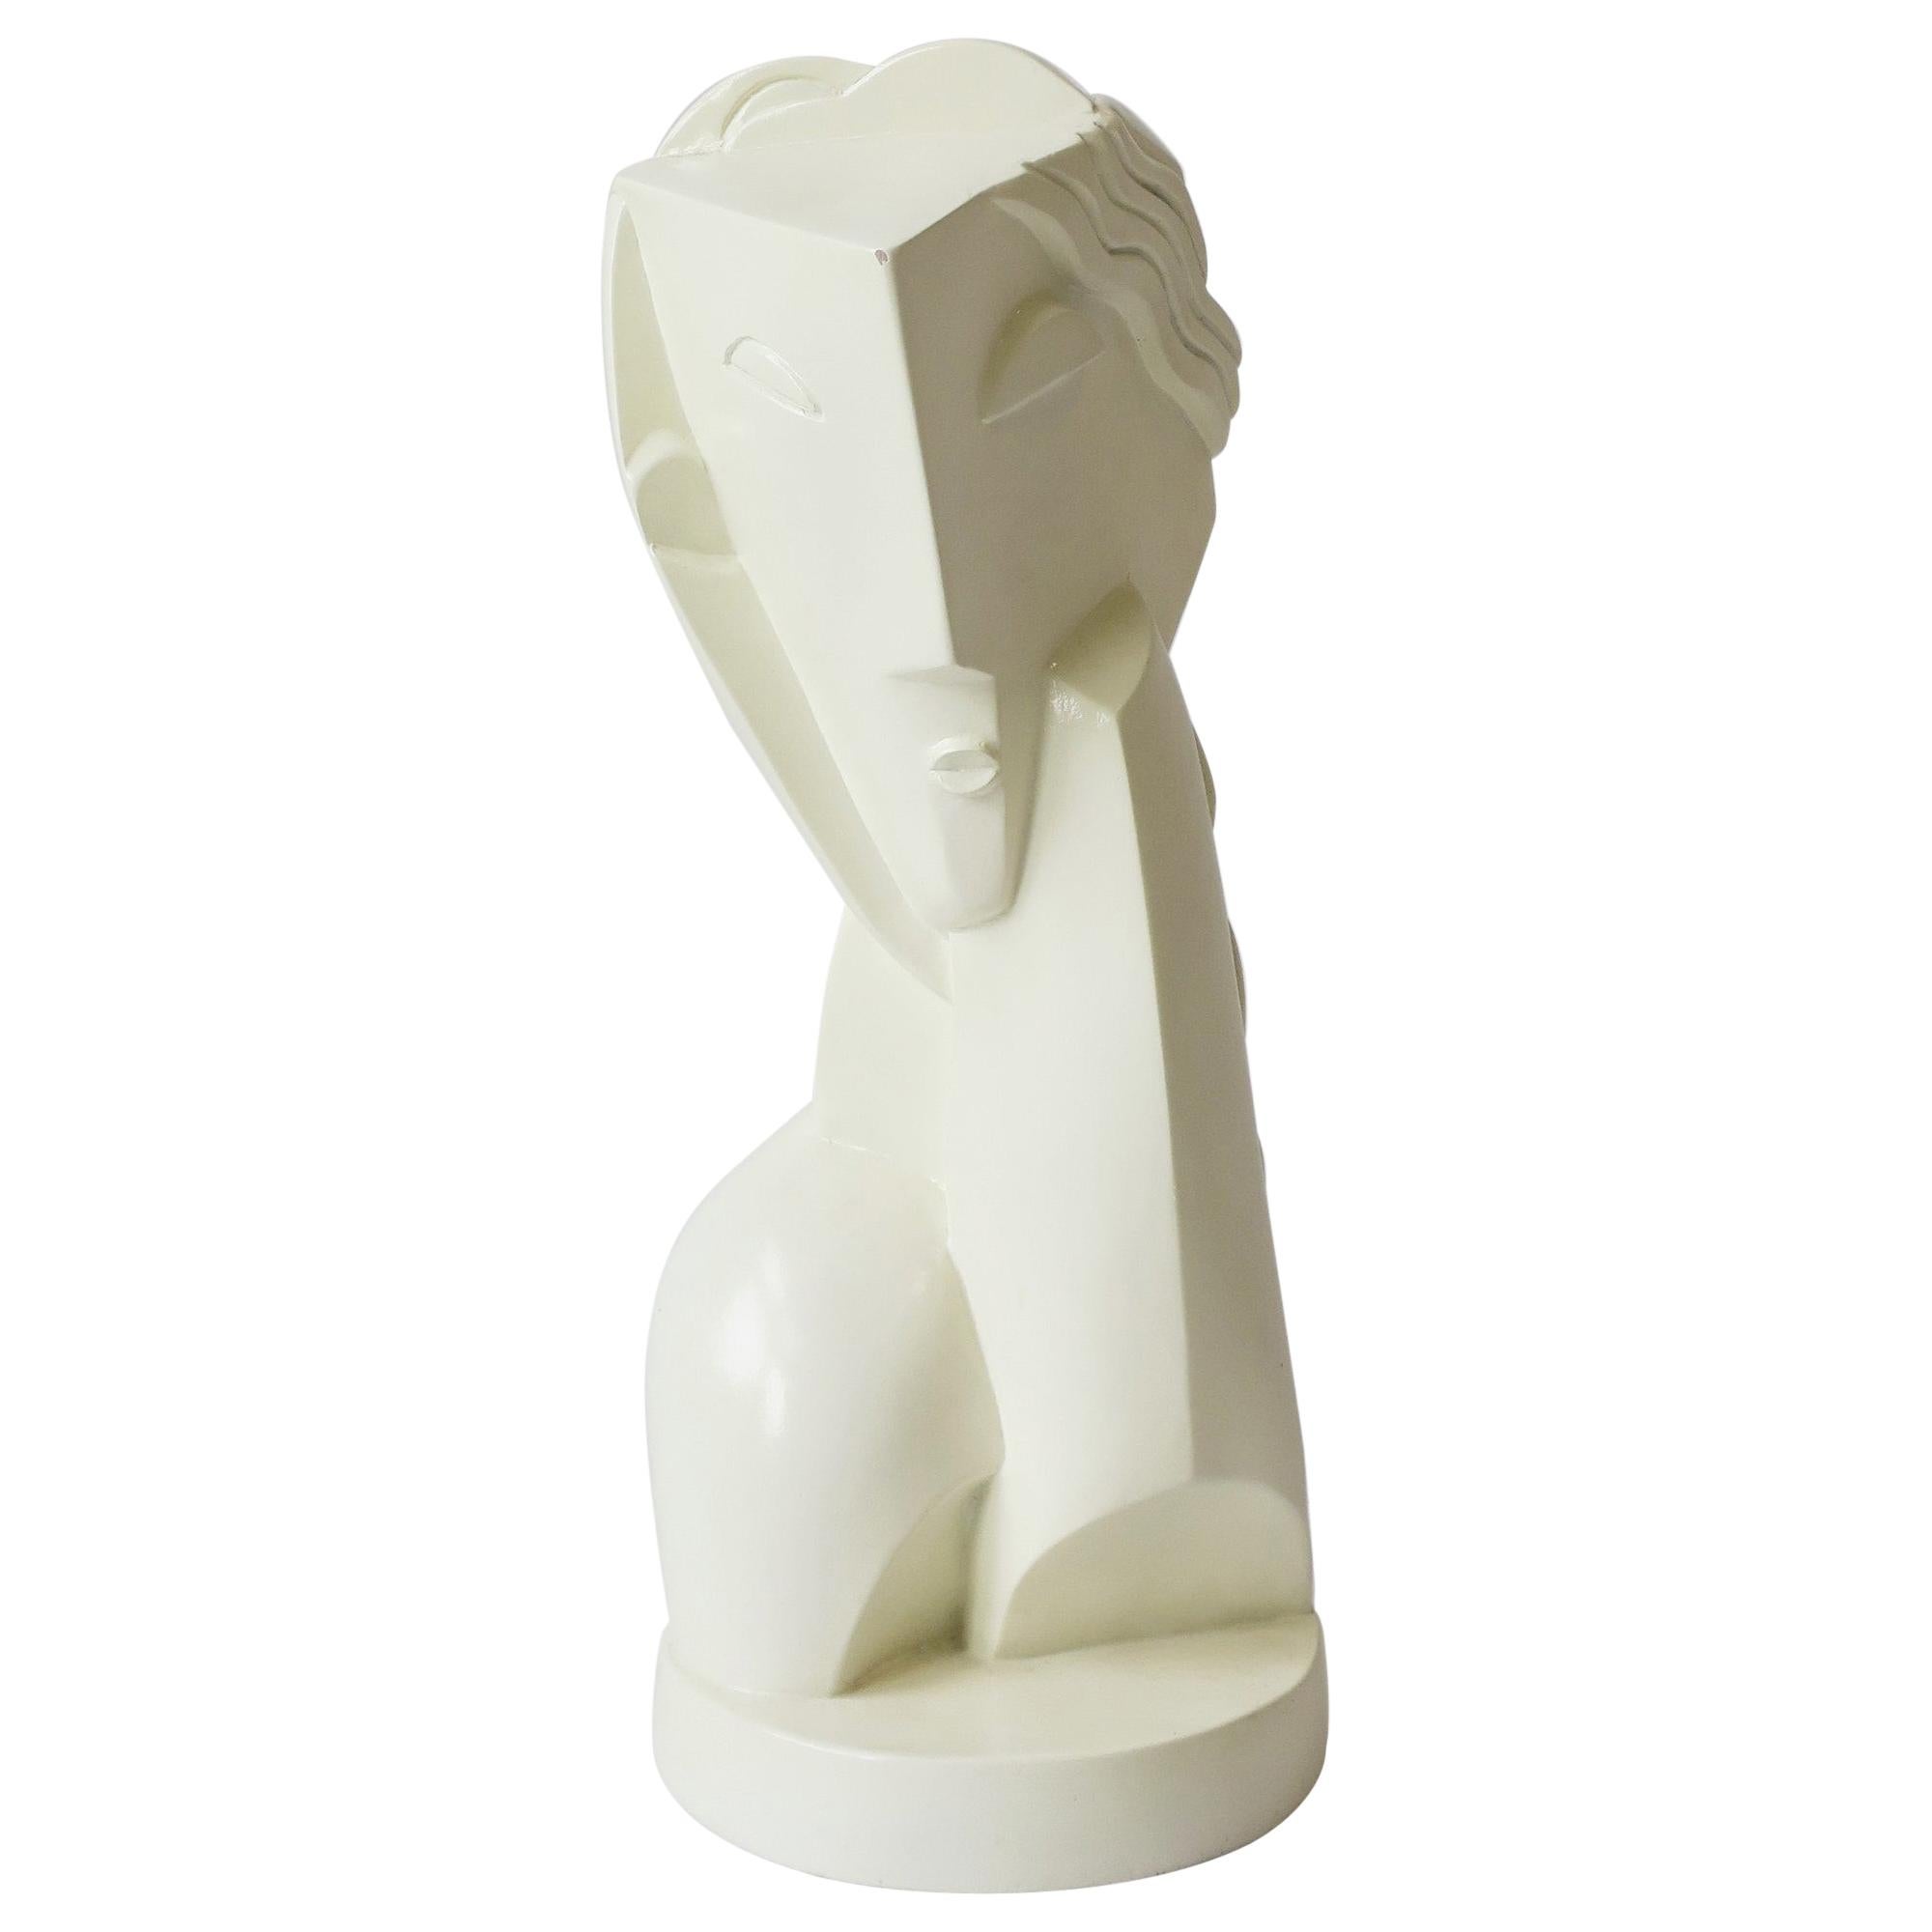 Art Deco Modern Cubist Figurative Bust Sculpture, 1961